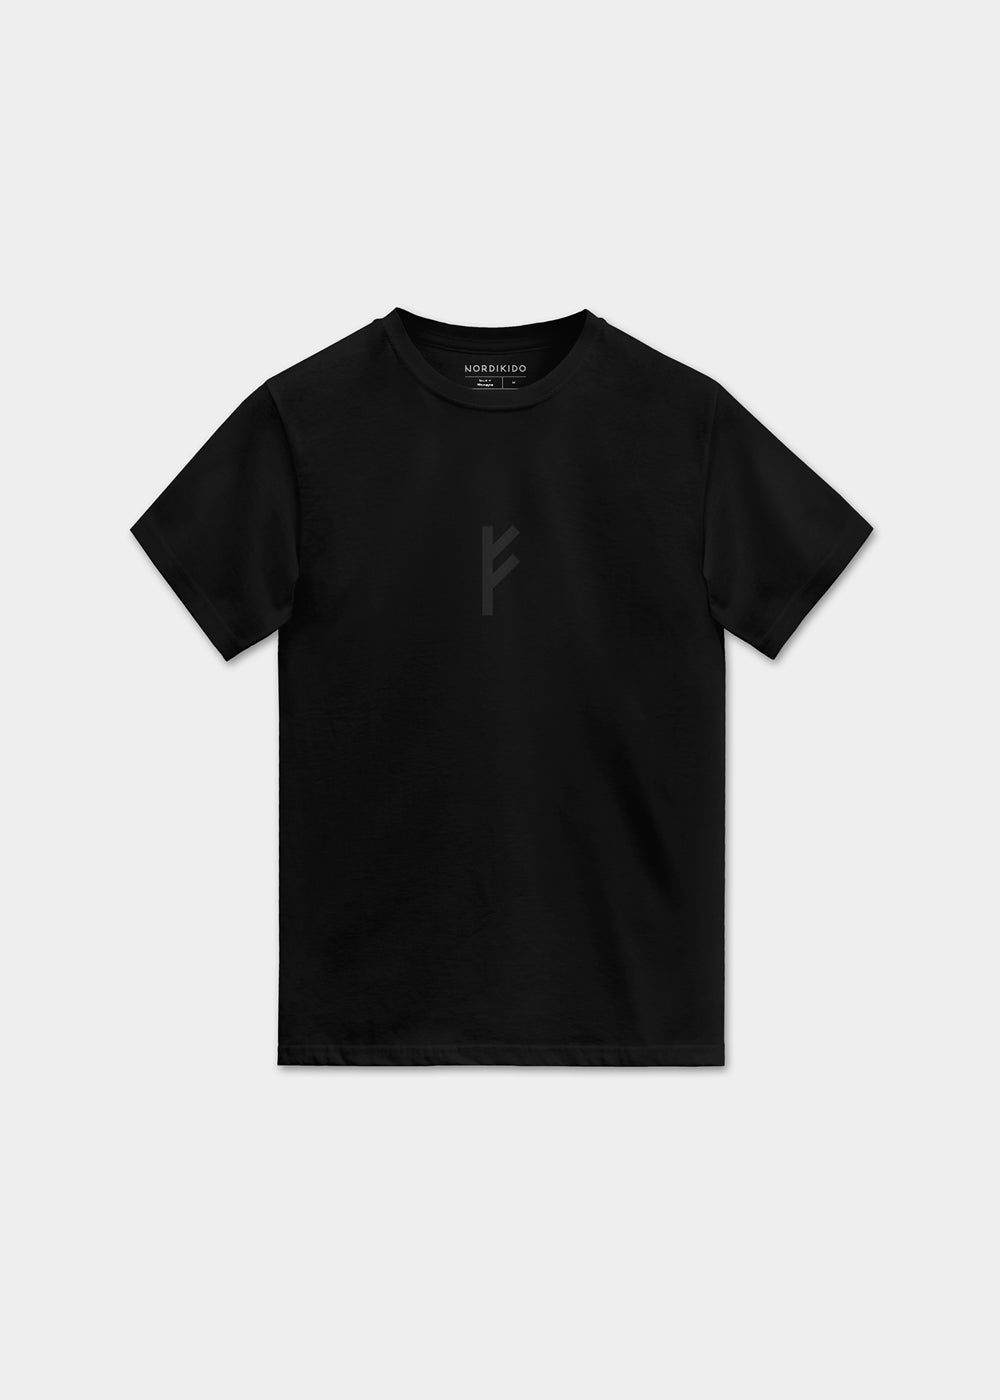 Fehu Elder Futhark Rune T-shirt black that reflects Viking Culture and Minimalist Design